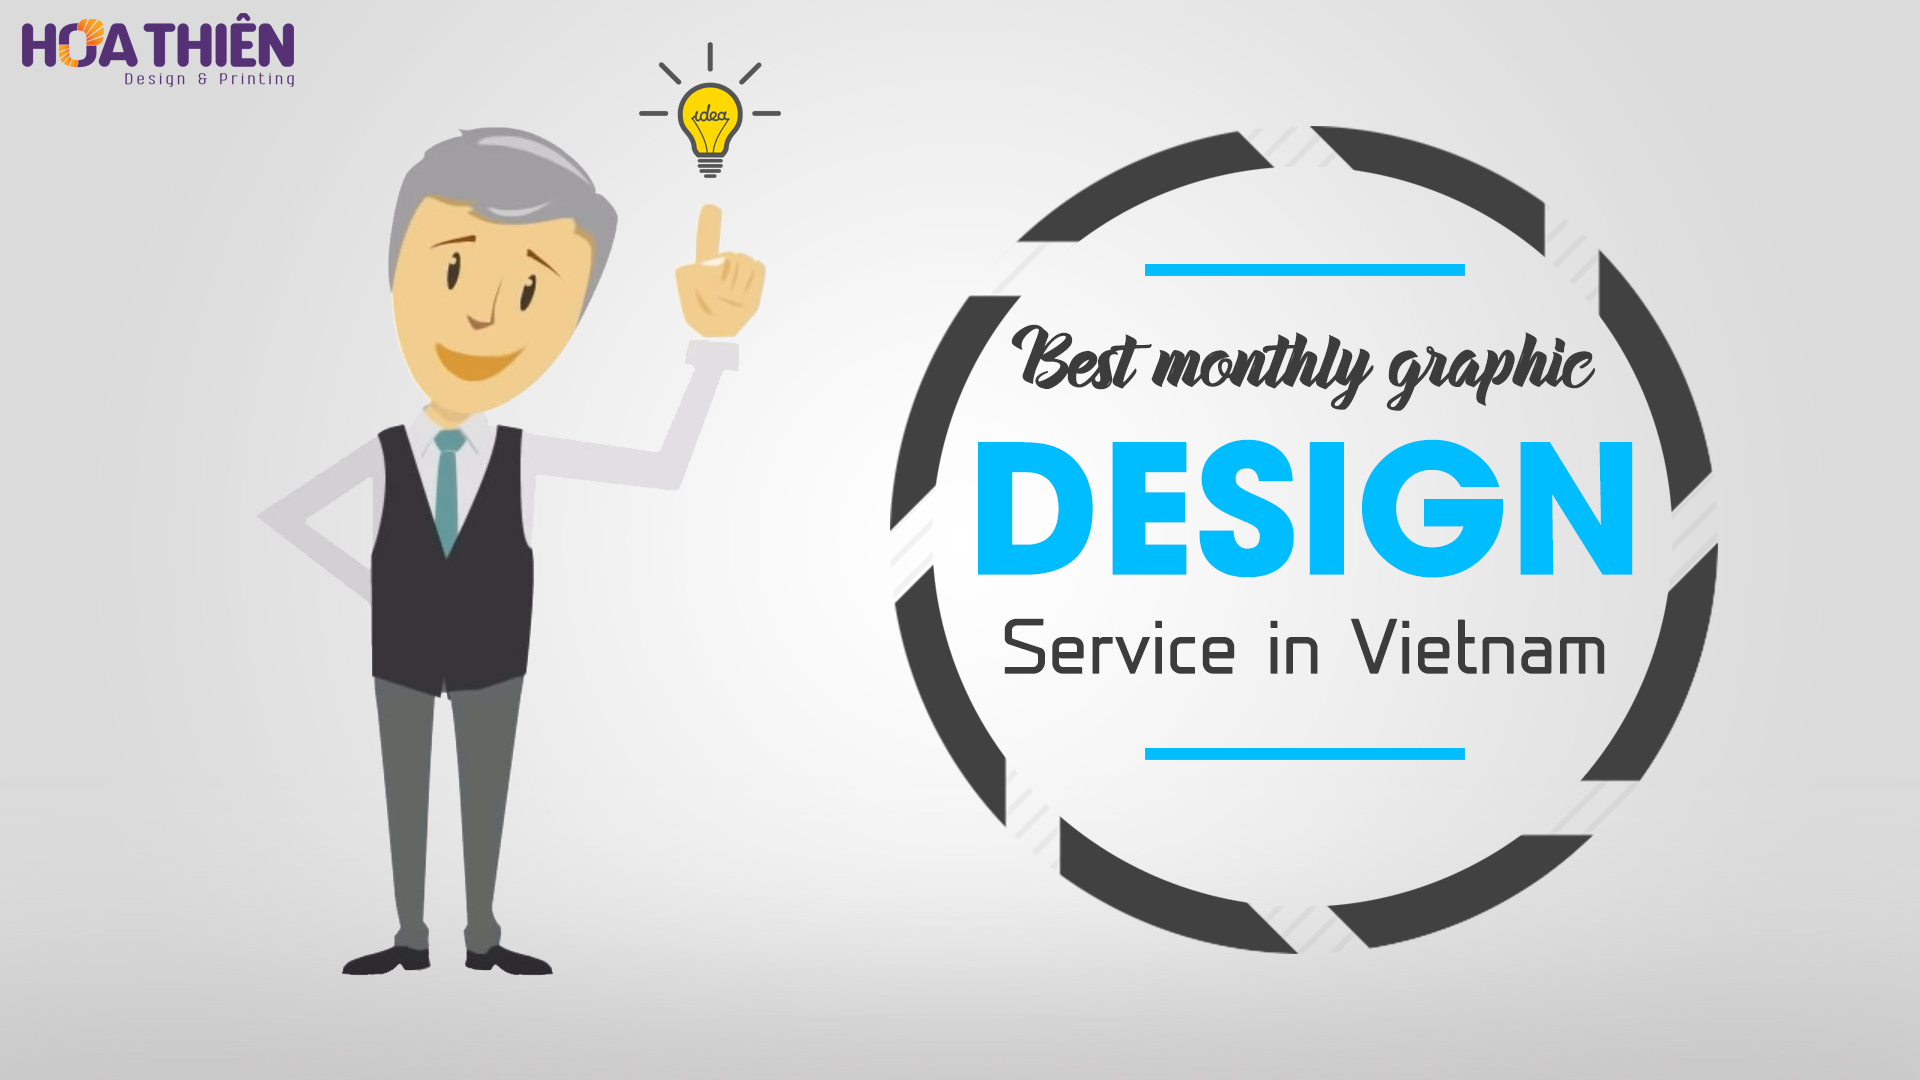 Best monthly graphic design service in Vietnam